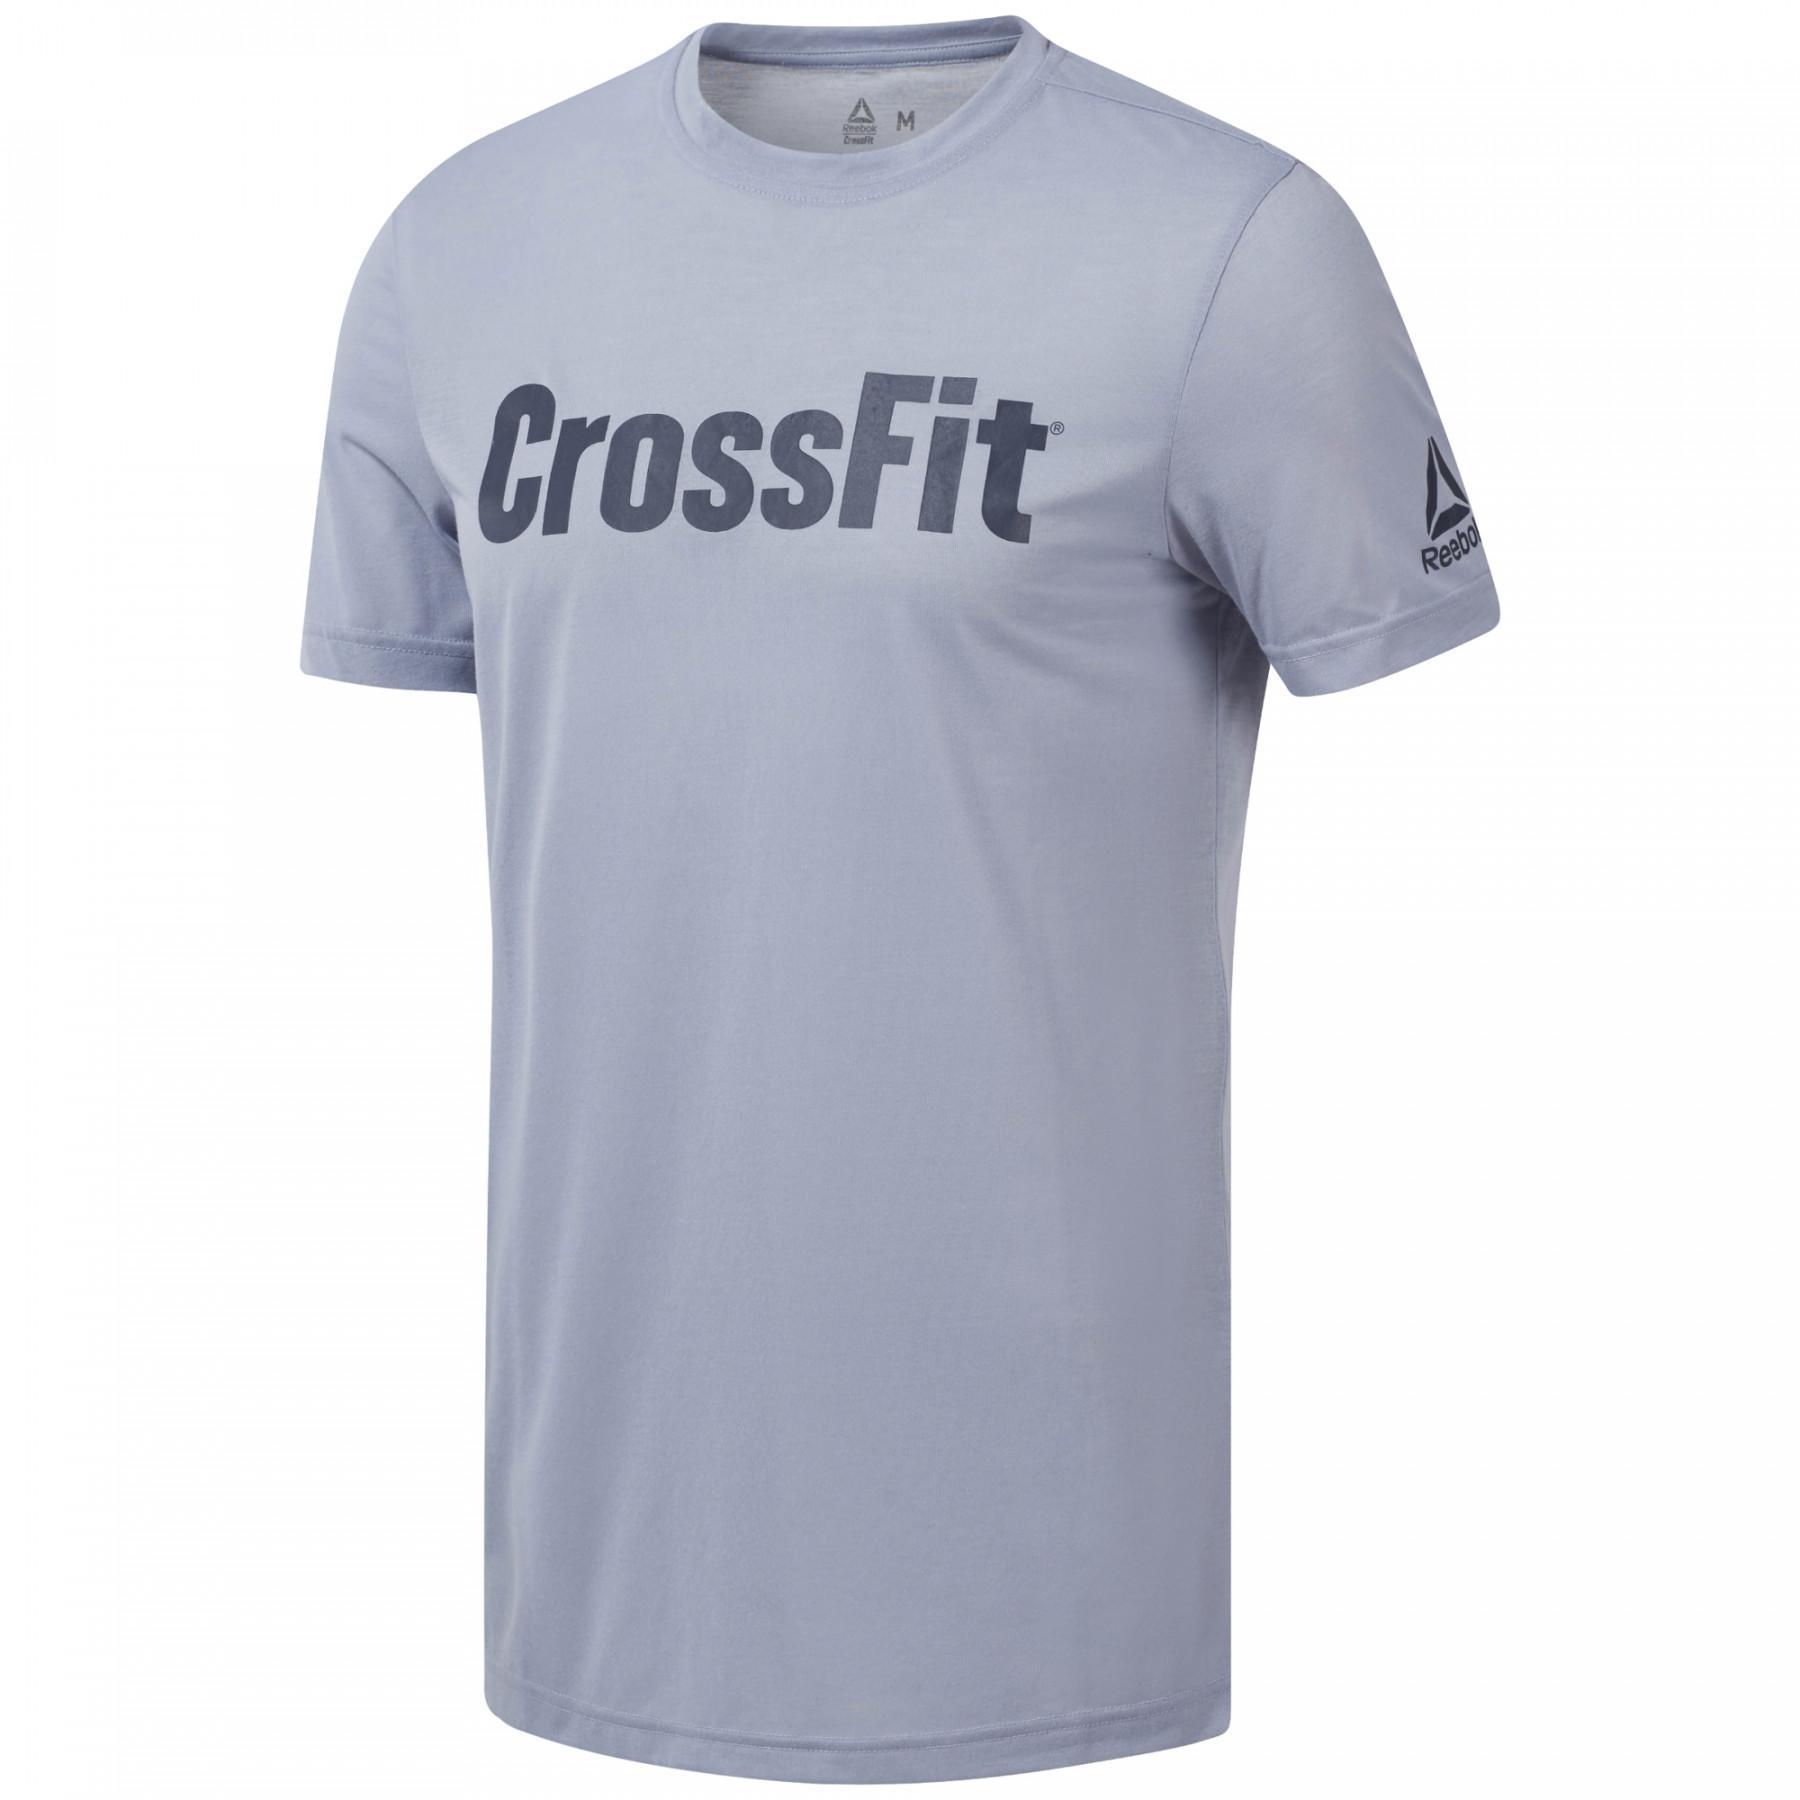 Camiseta Reebok Crossfit